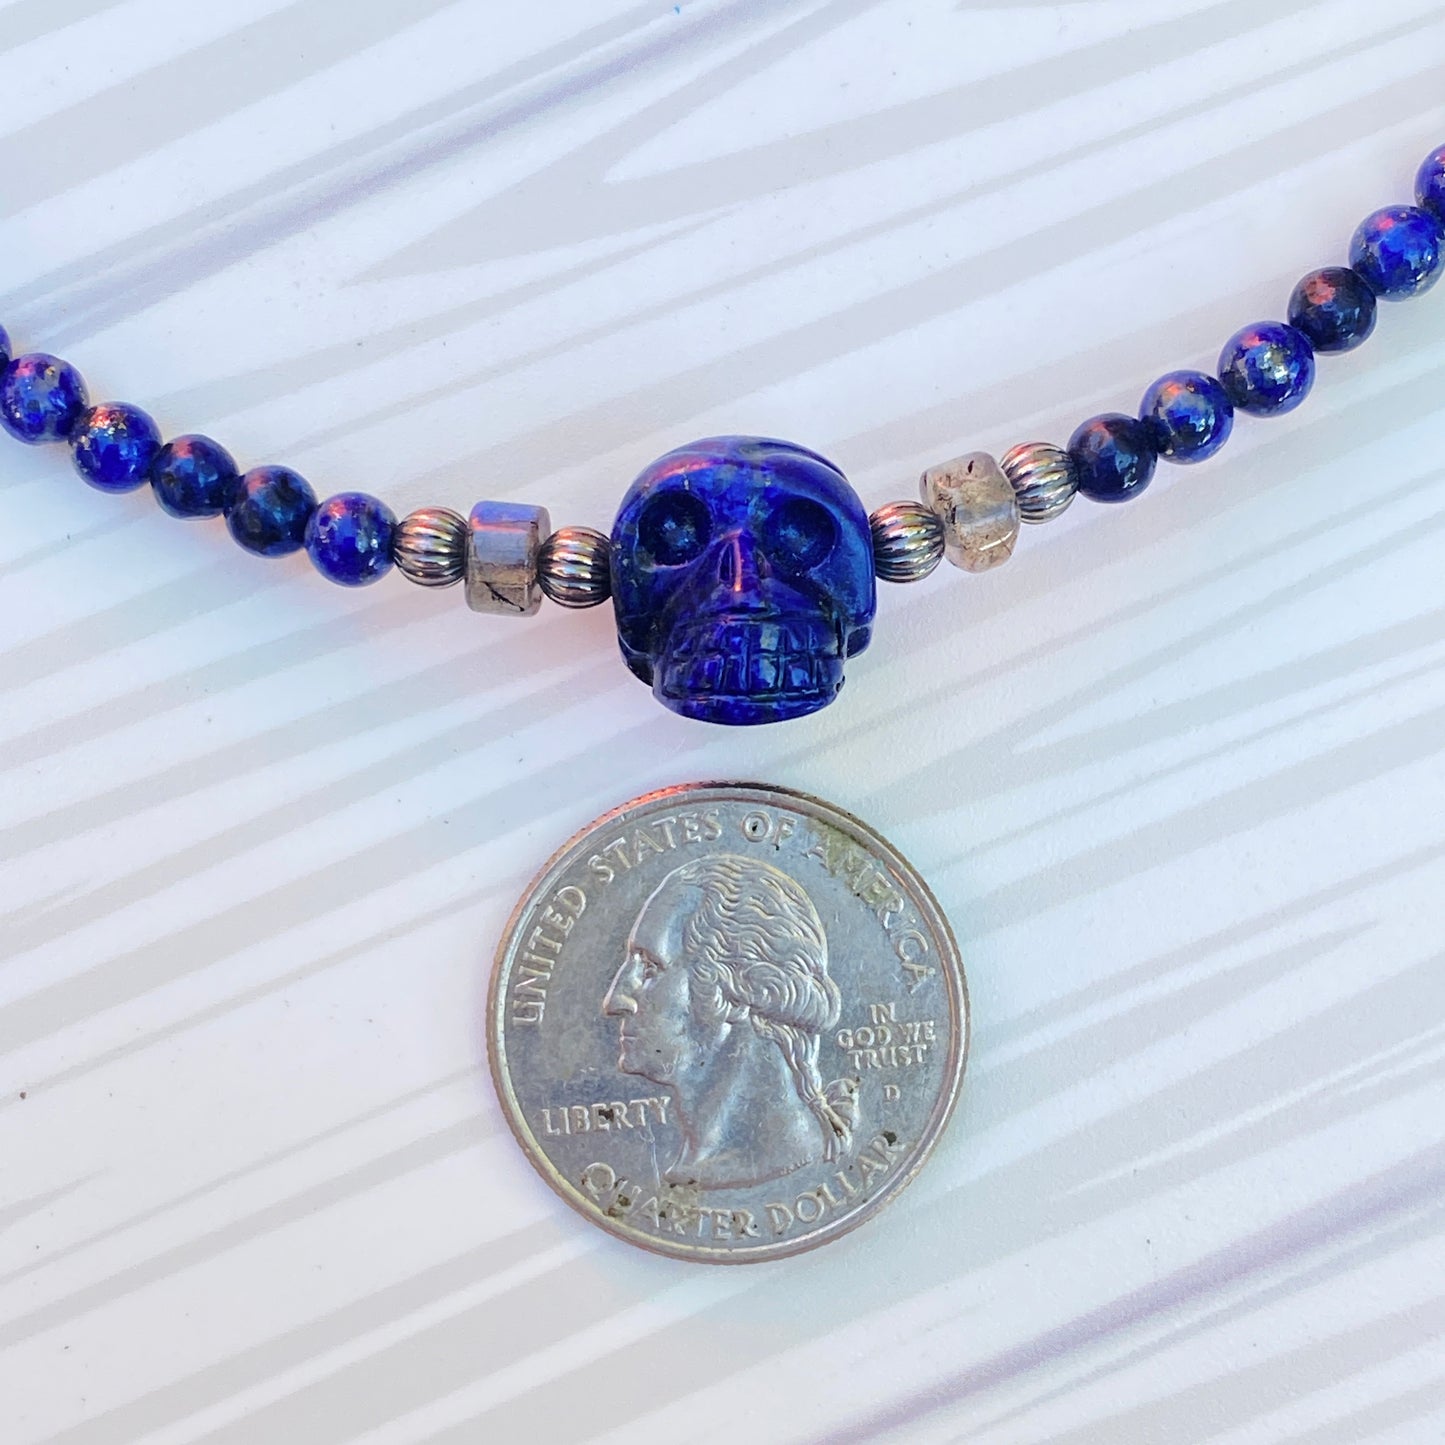 Lapis Lazuli, Labradorite gemstones, and Sterling Silver Skull Choker